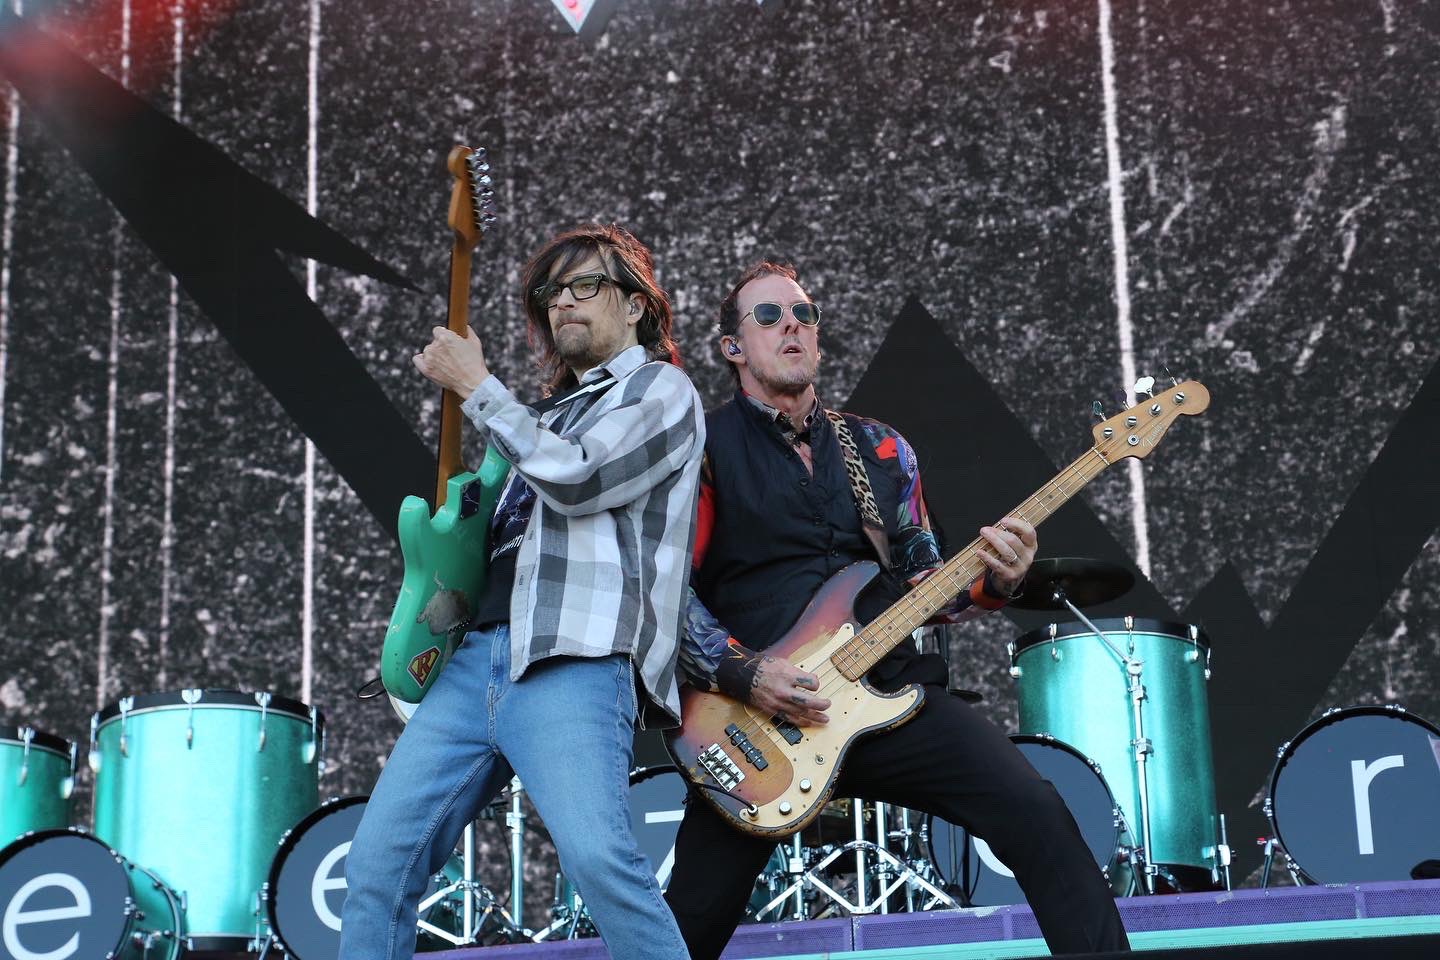 Rivers Cuomo 'Ngomong Bahasa Indonesia' Saat Weezer Manggung di Soundrenaline 2022